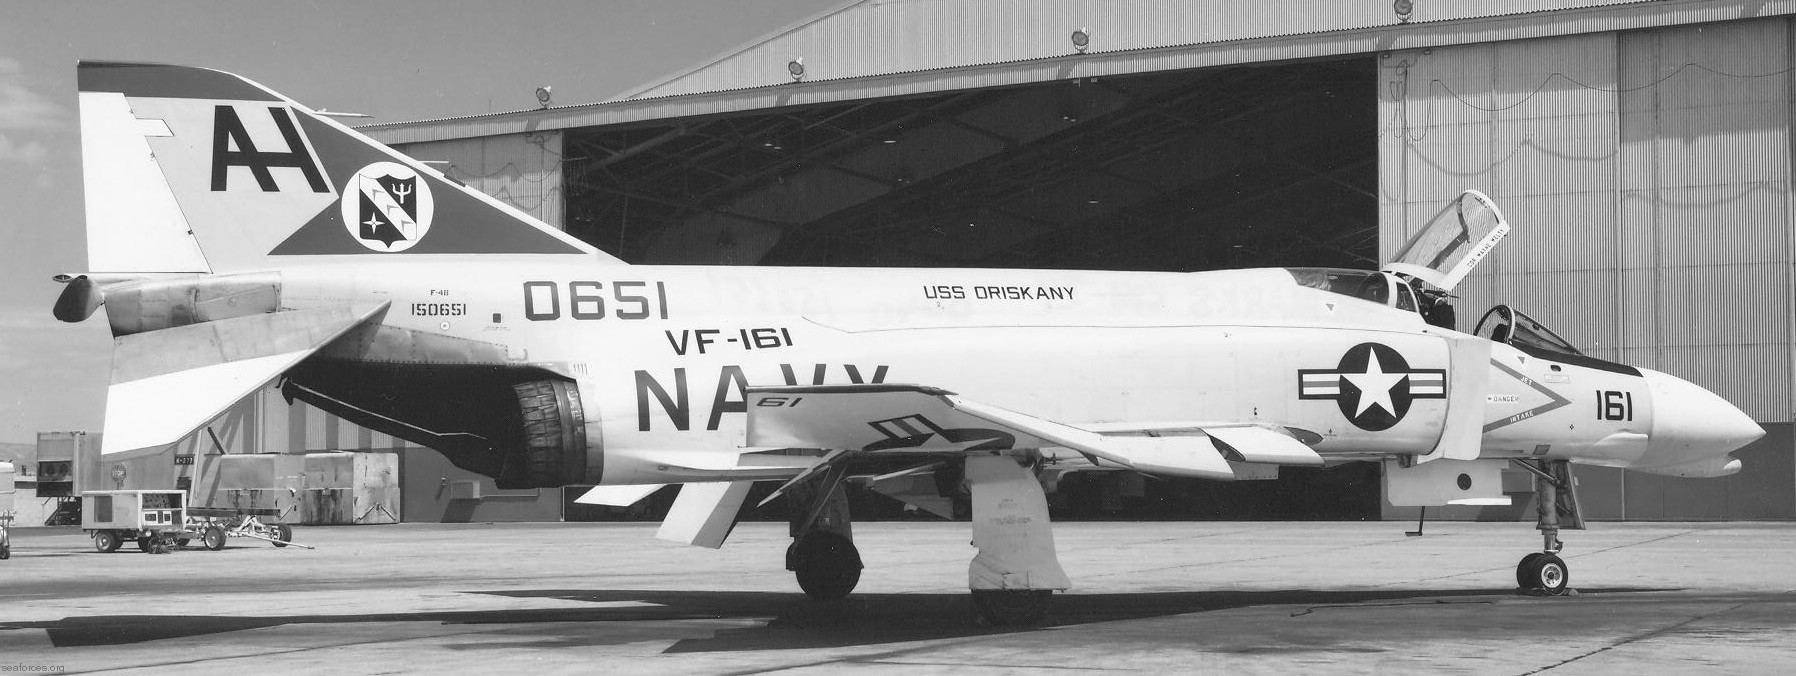 vf-161 chargers fighter squadron navy f-4b phantom ii carrier air wing cvw-16 uss oriskany cv-34 06